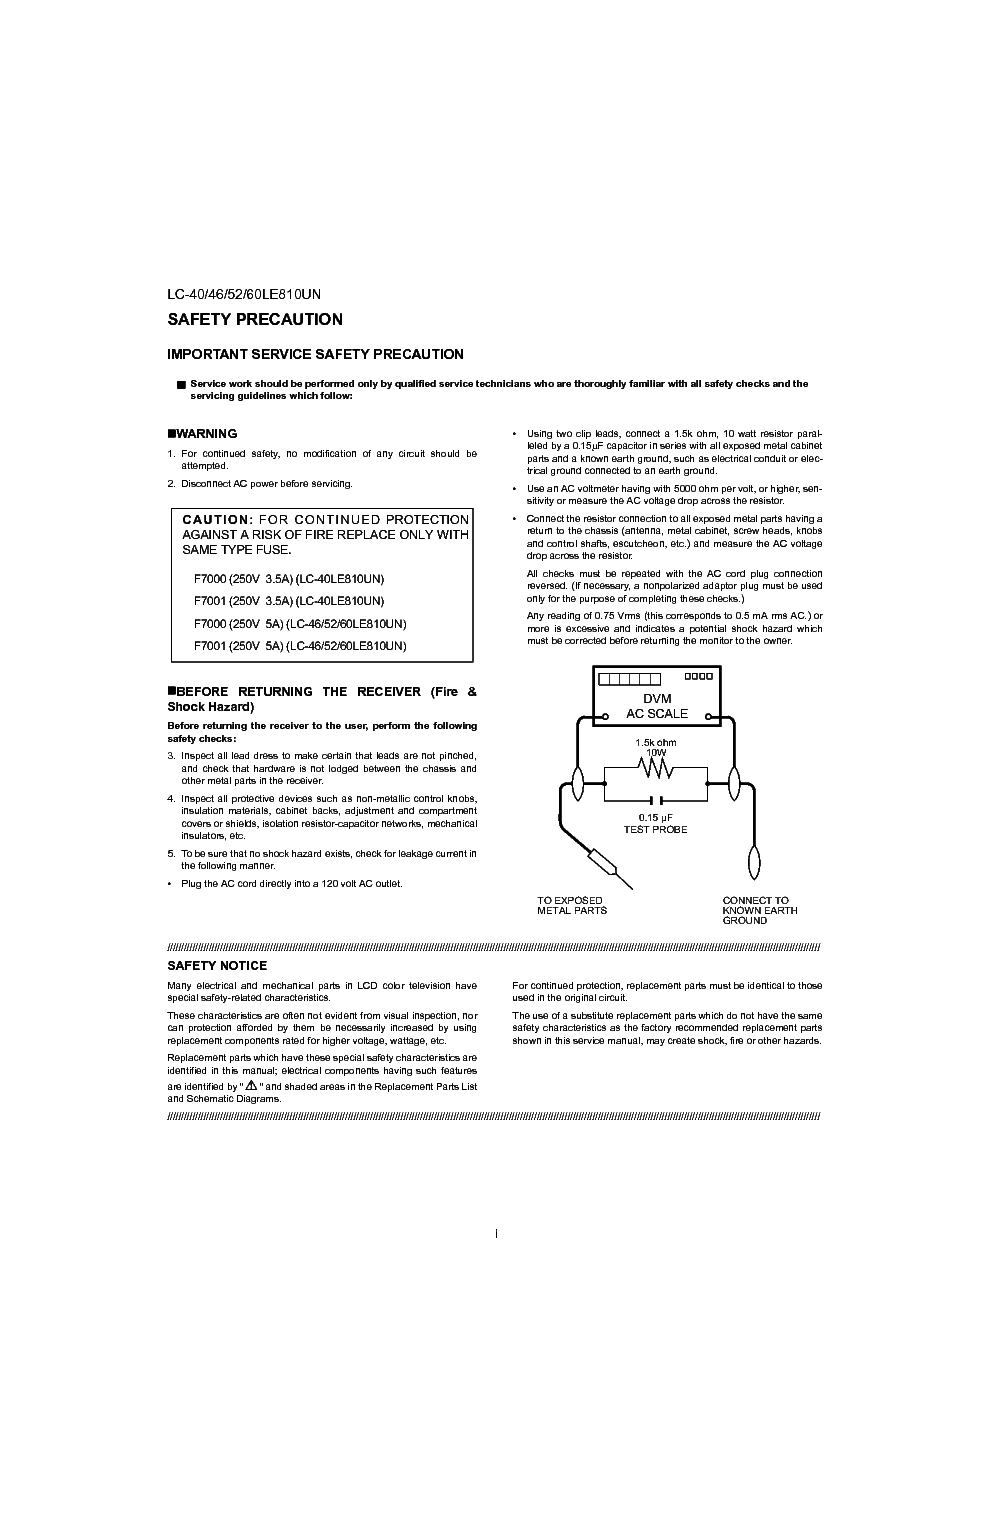 SHARP LC-40LE810UN LC-46LE810UN LC-52LE810UN LC-60LE810UN service manual (2nd page)